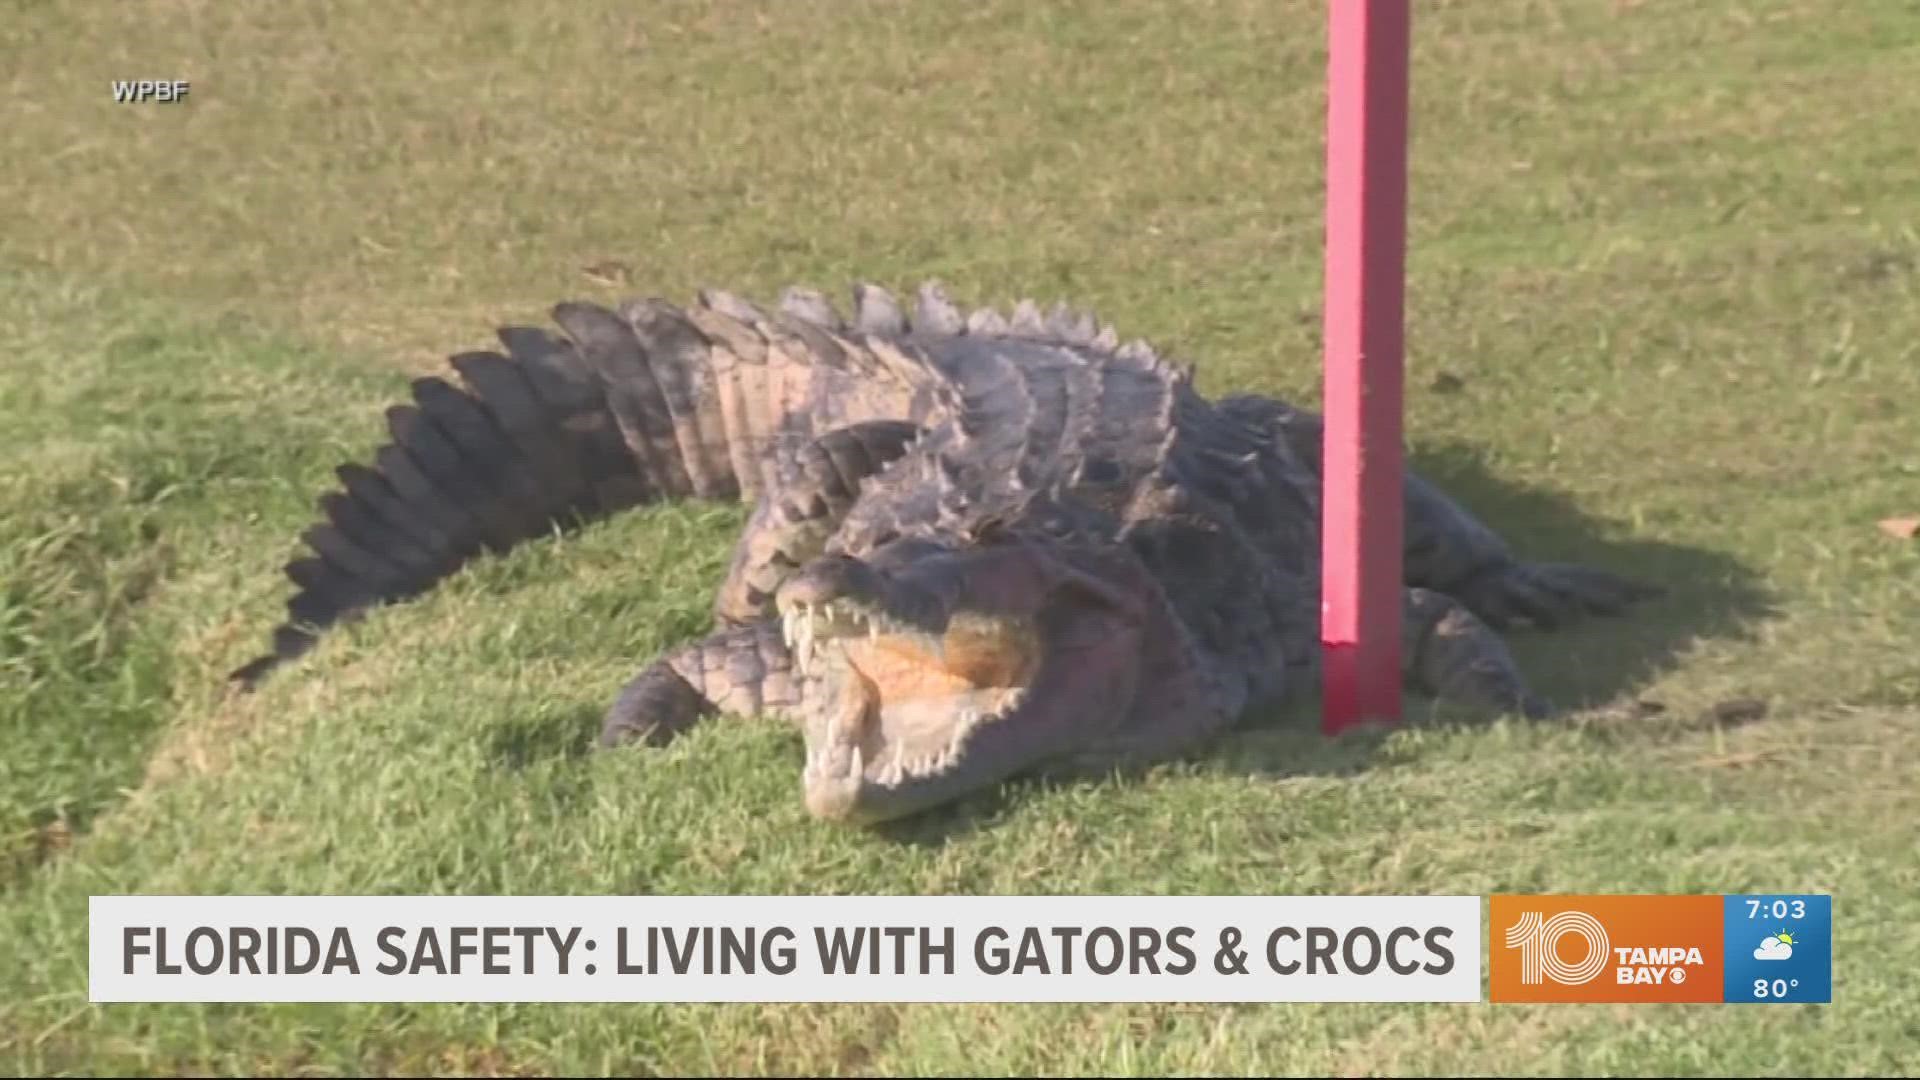 Over 1.2 million alligators and 15 hundred crocodiles call the sunshine state home.